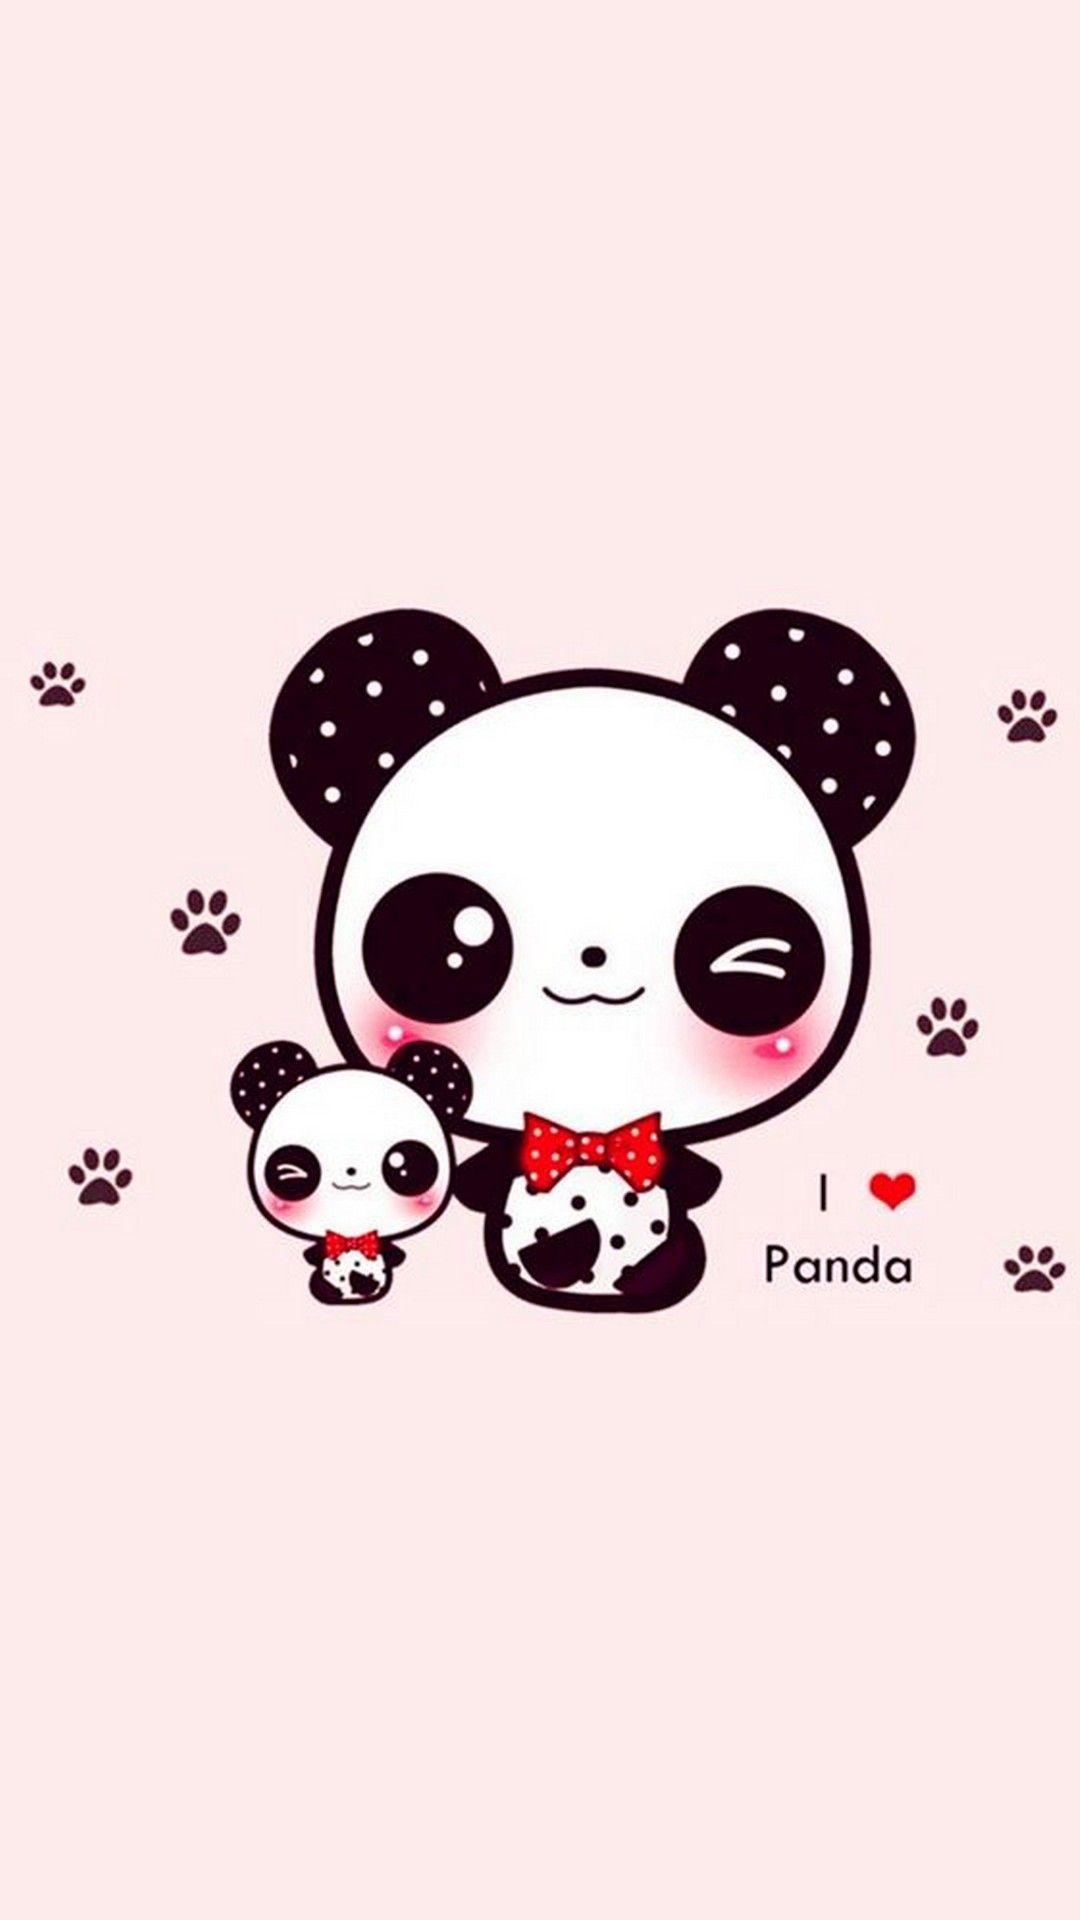 Cute Panda Wallpaper For iPhone iPhone Wallpaper. Cute